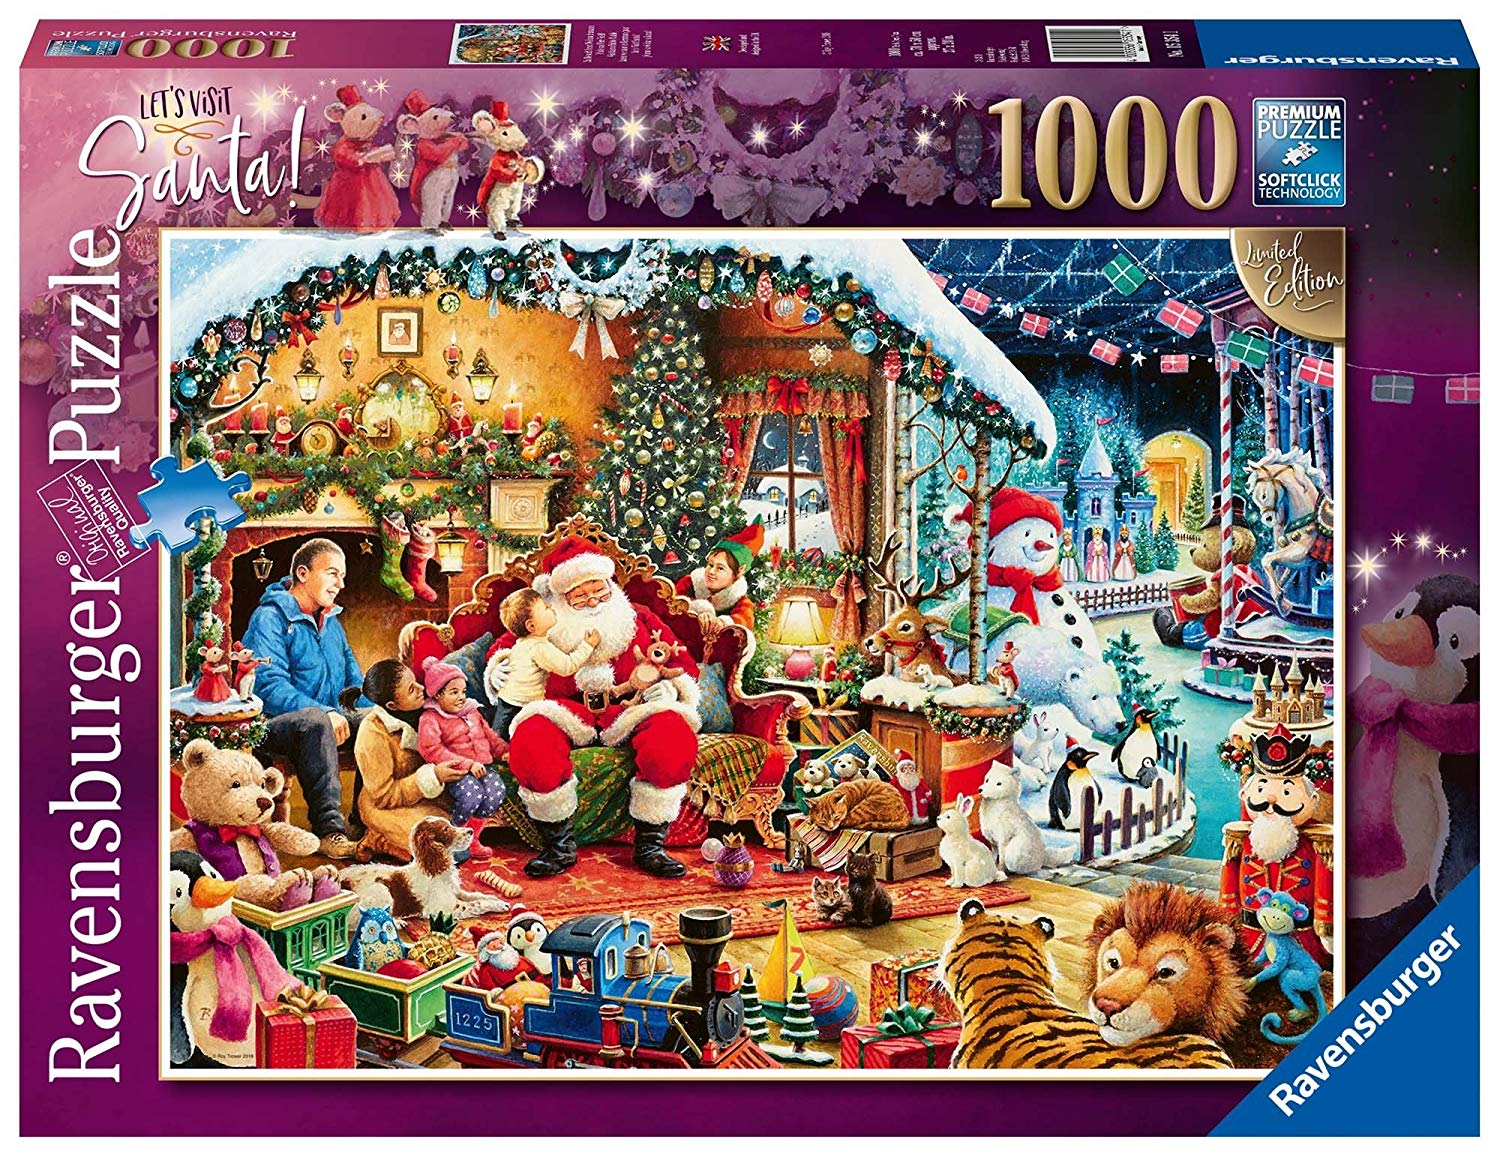 Ravensburger Uk Lets Visit Santa Limited Edition Puzzle